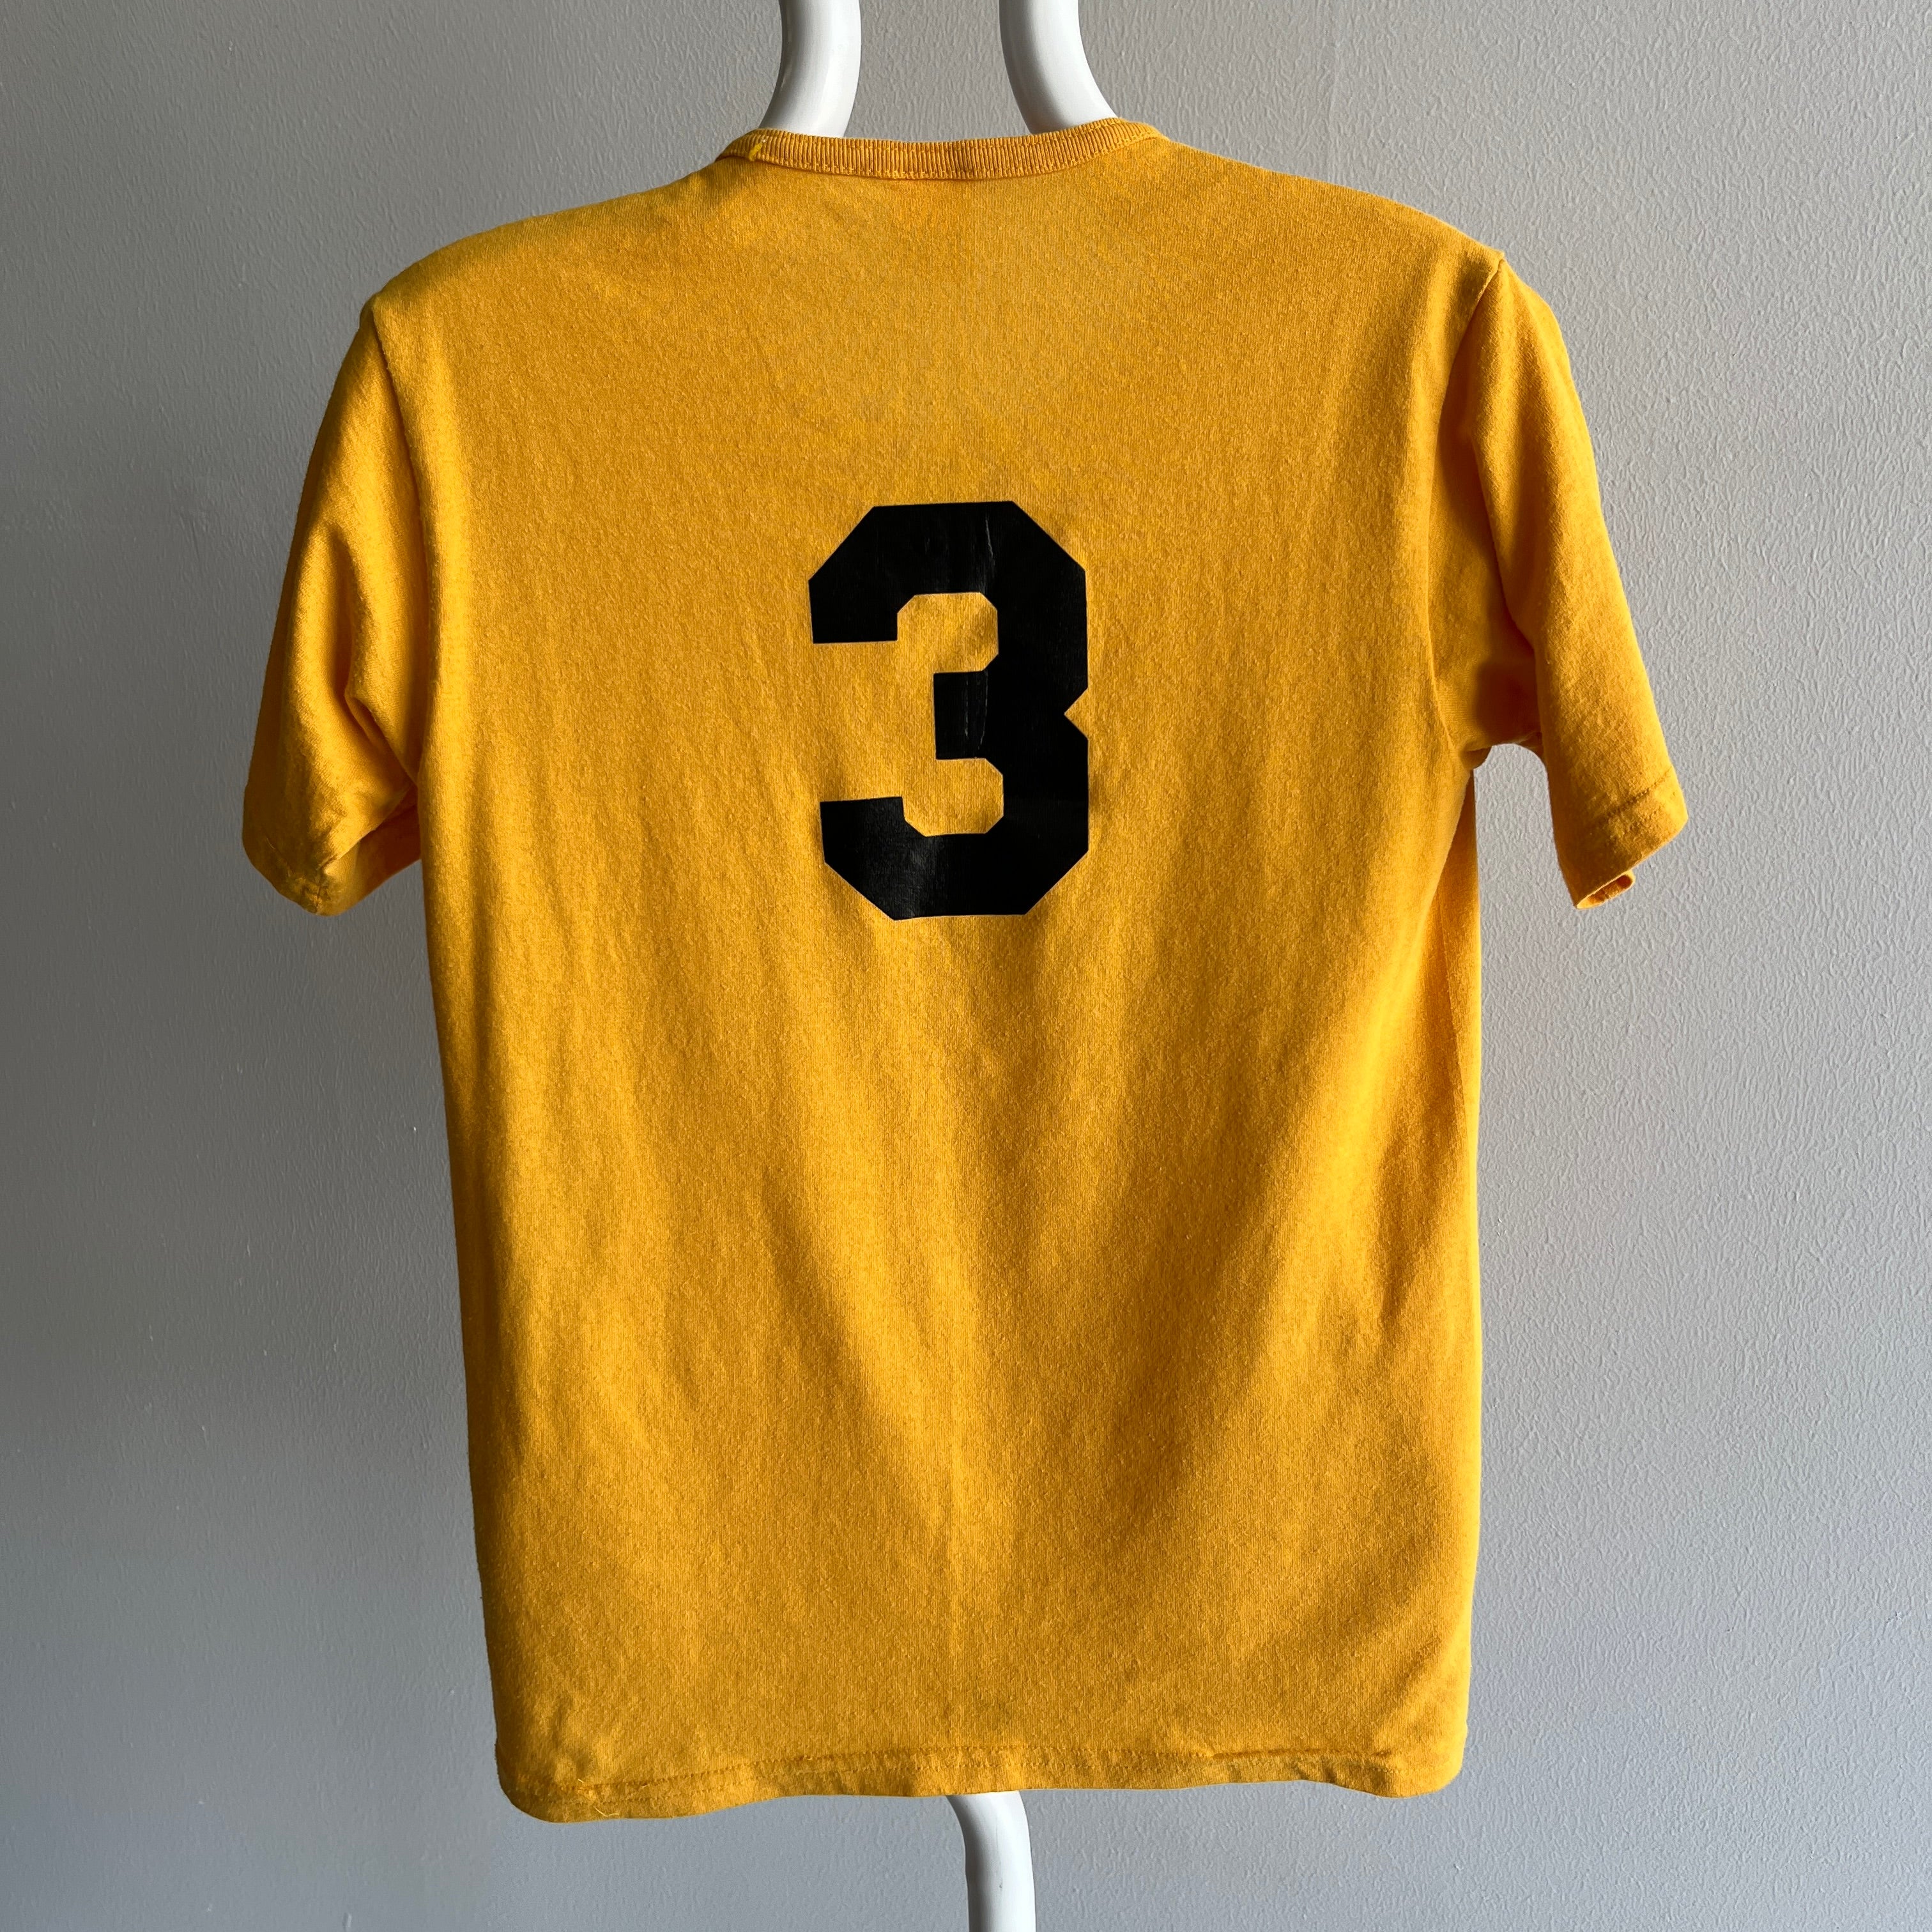 1990s Carvel No. 3 Henley T-Shirt